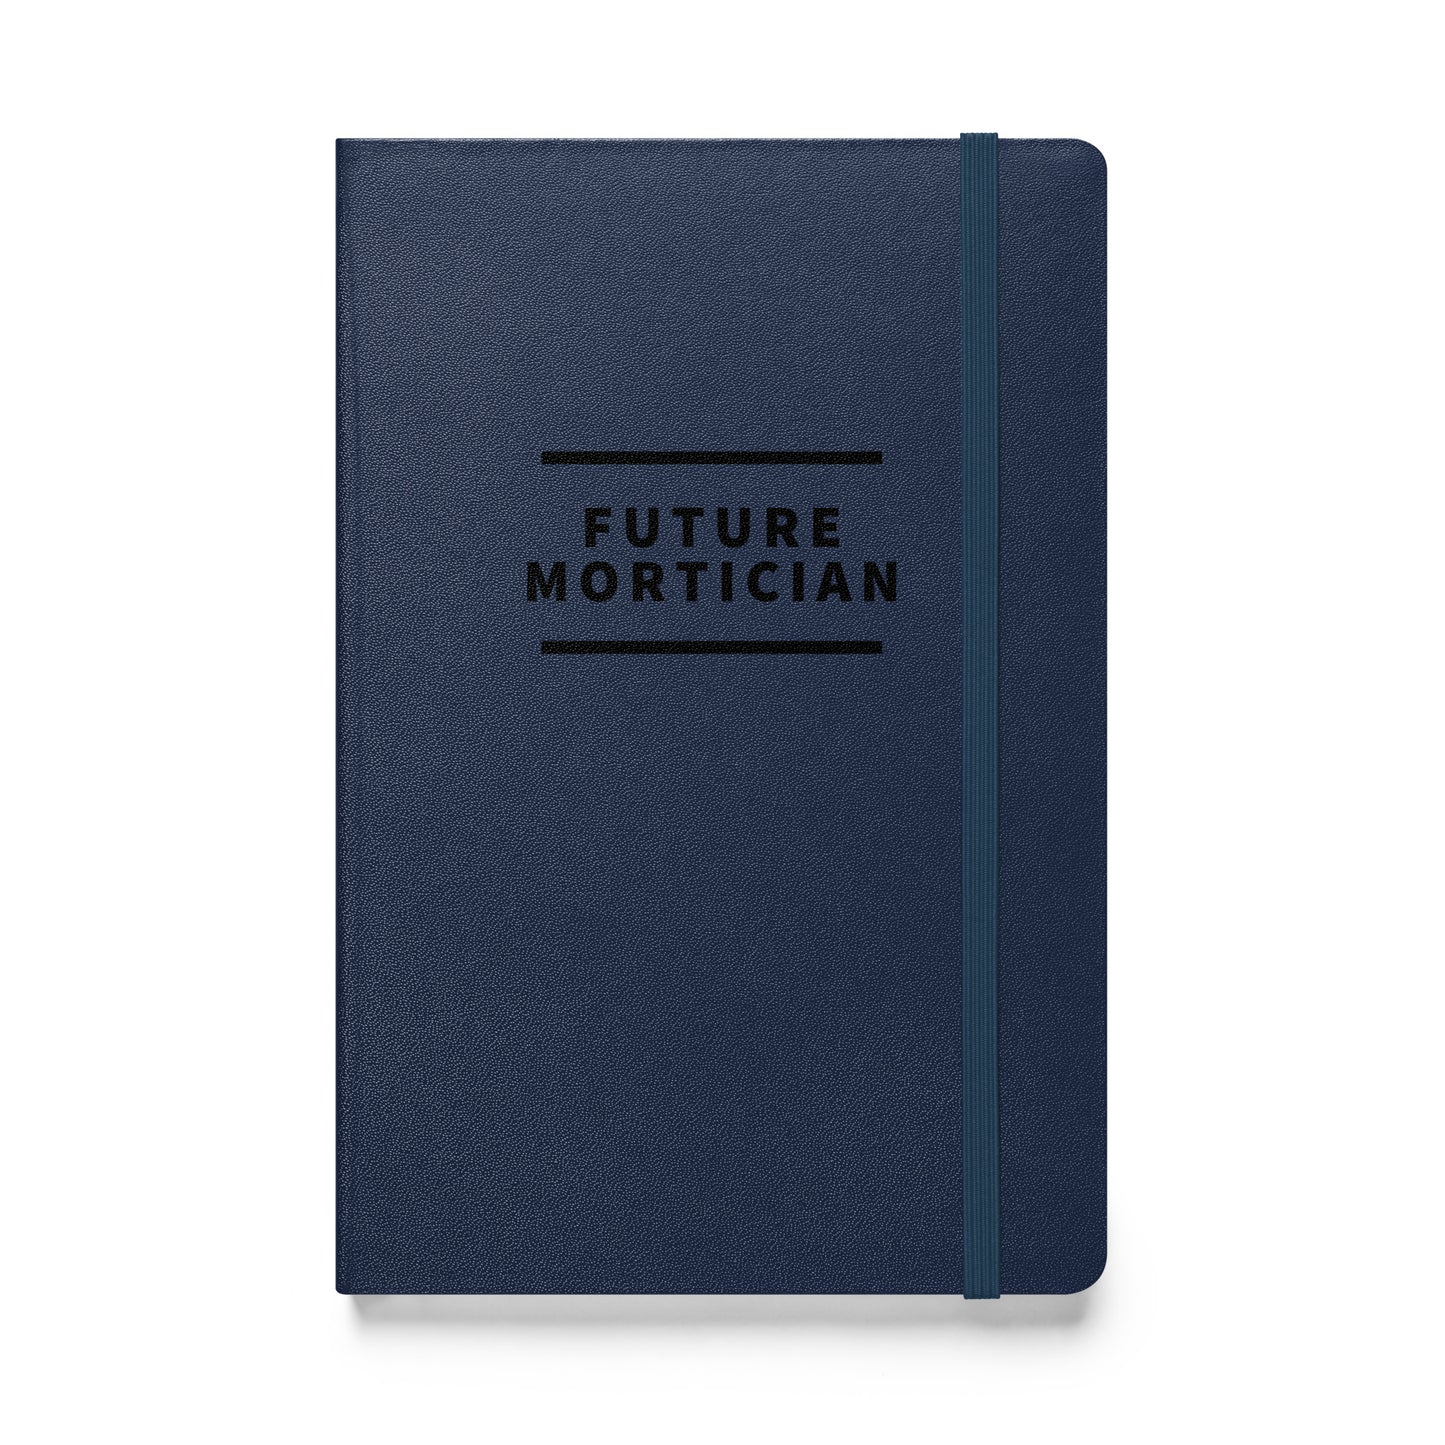 Future Mortician Hardcover Bound Notebook